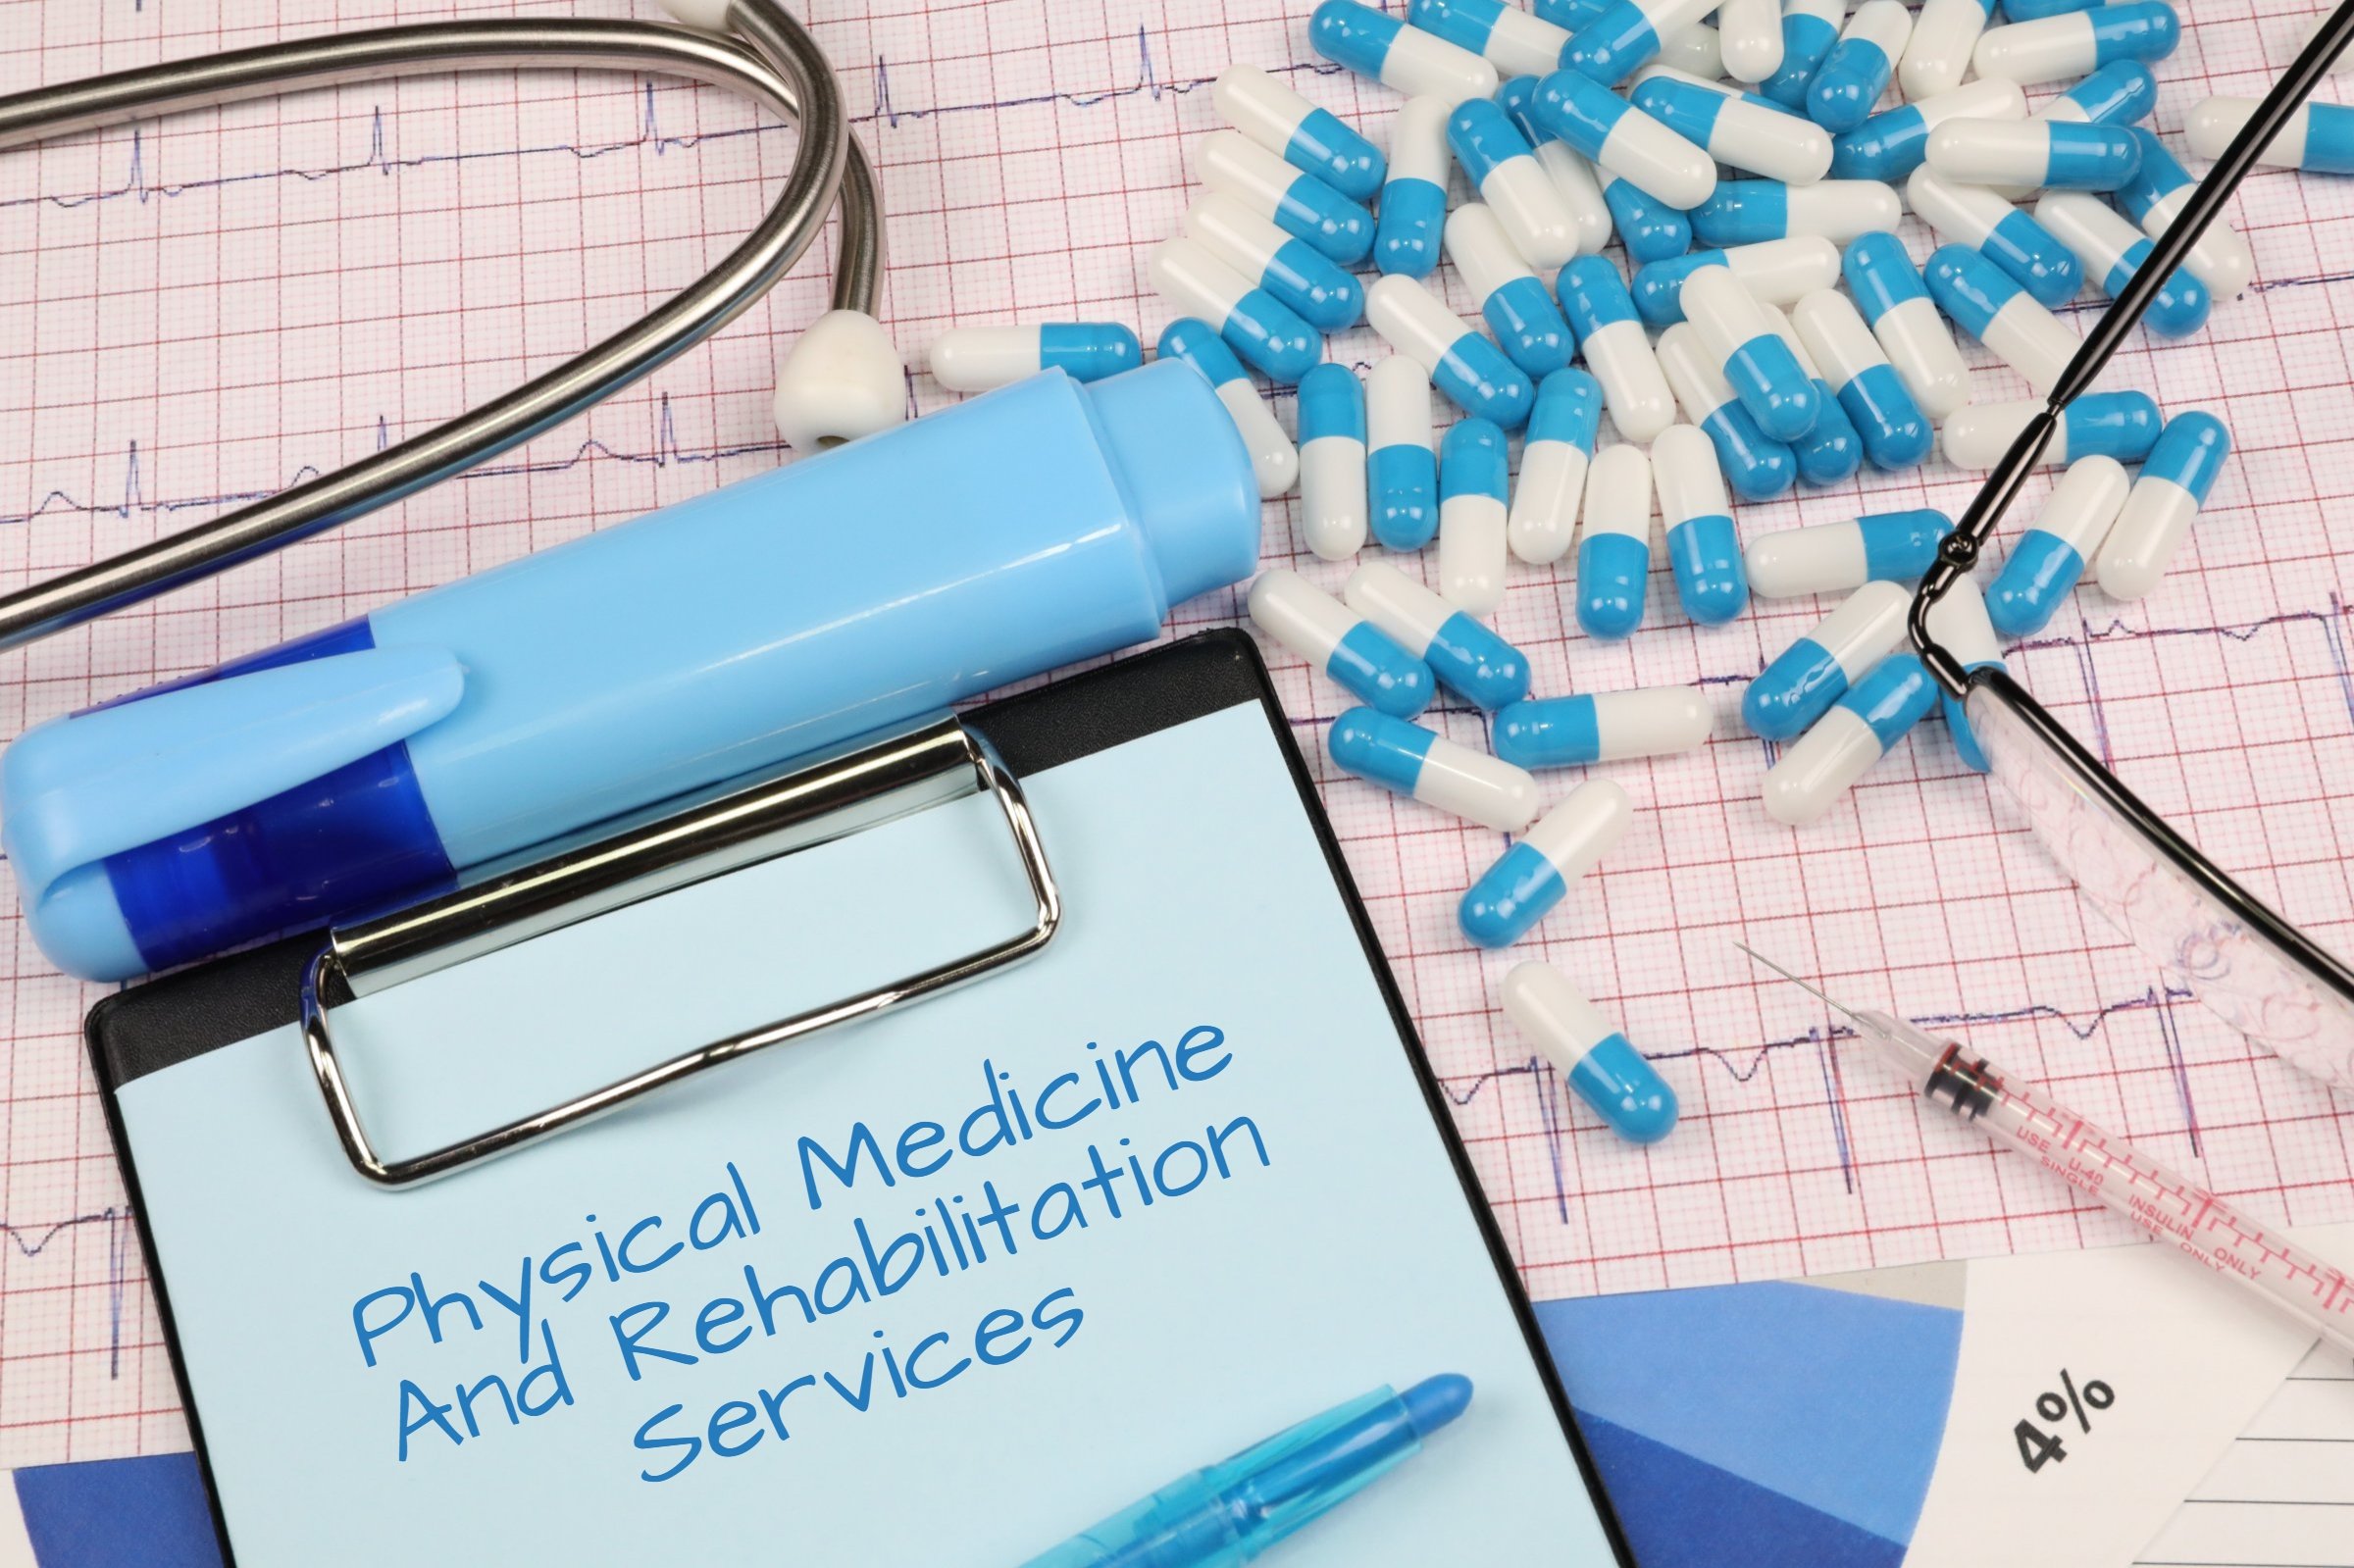 physical medicine and rehabilitation services